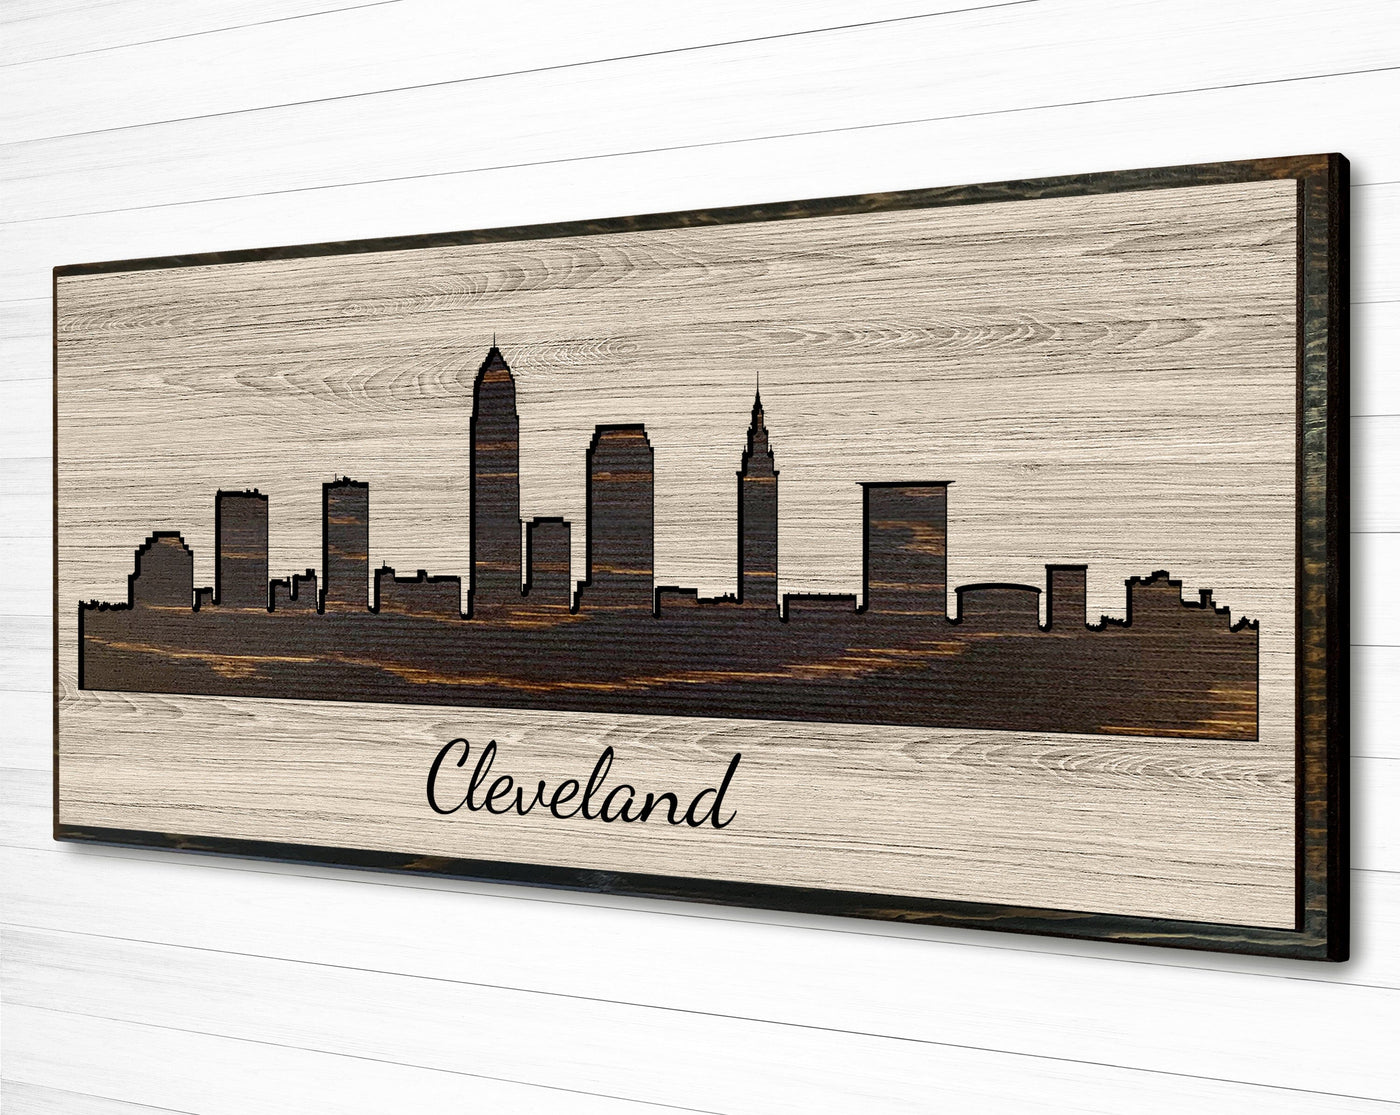 Cleveland Ohio City Skyline Custom Wood Wall Art Carved with CNC Machine